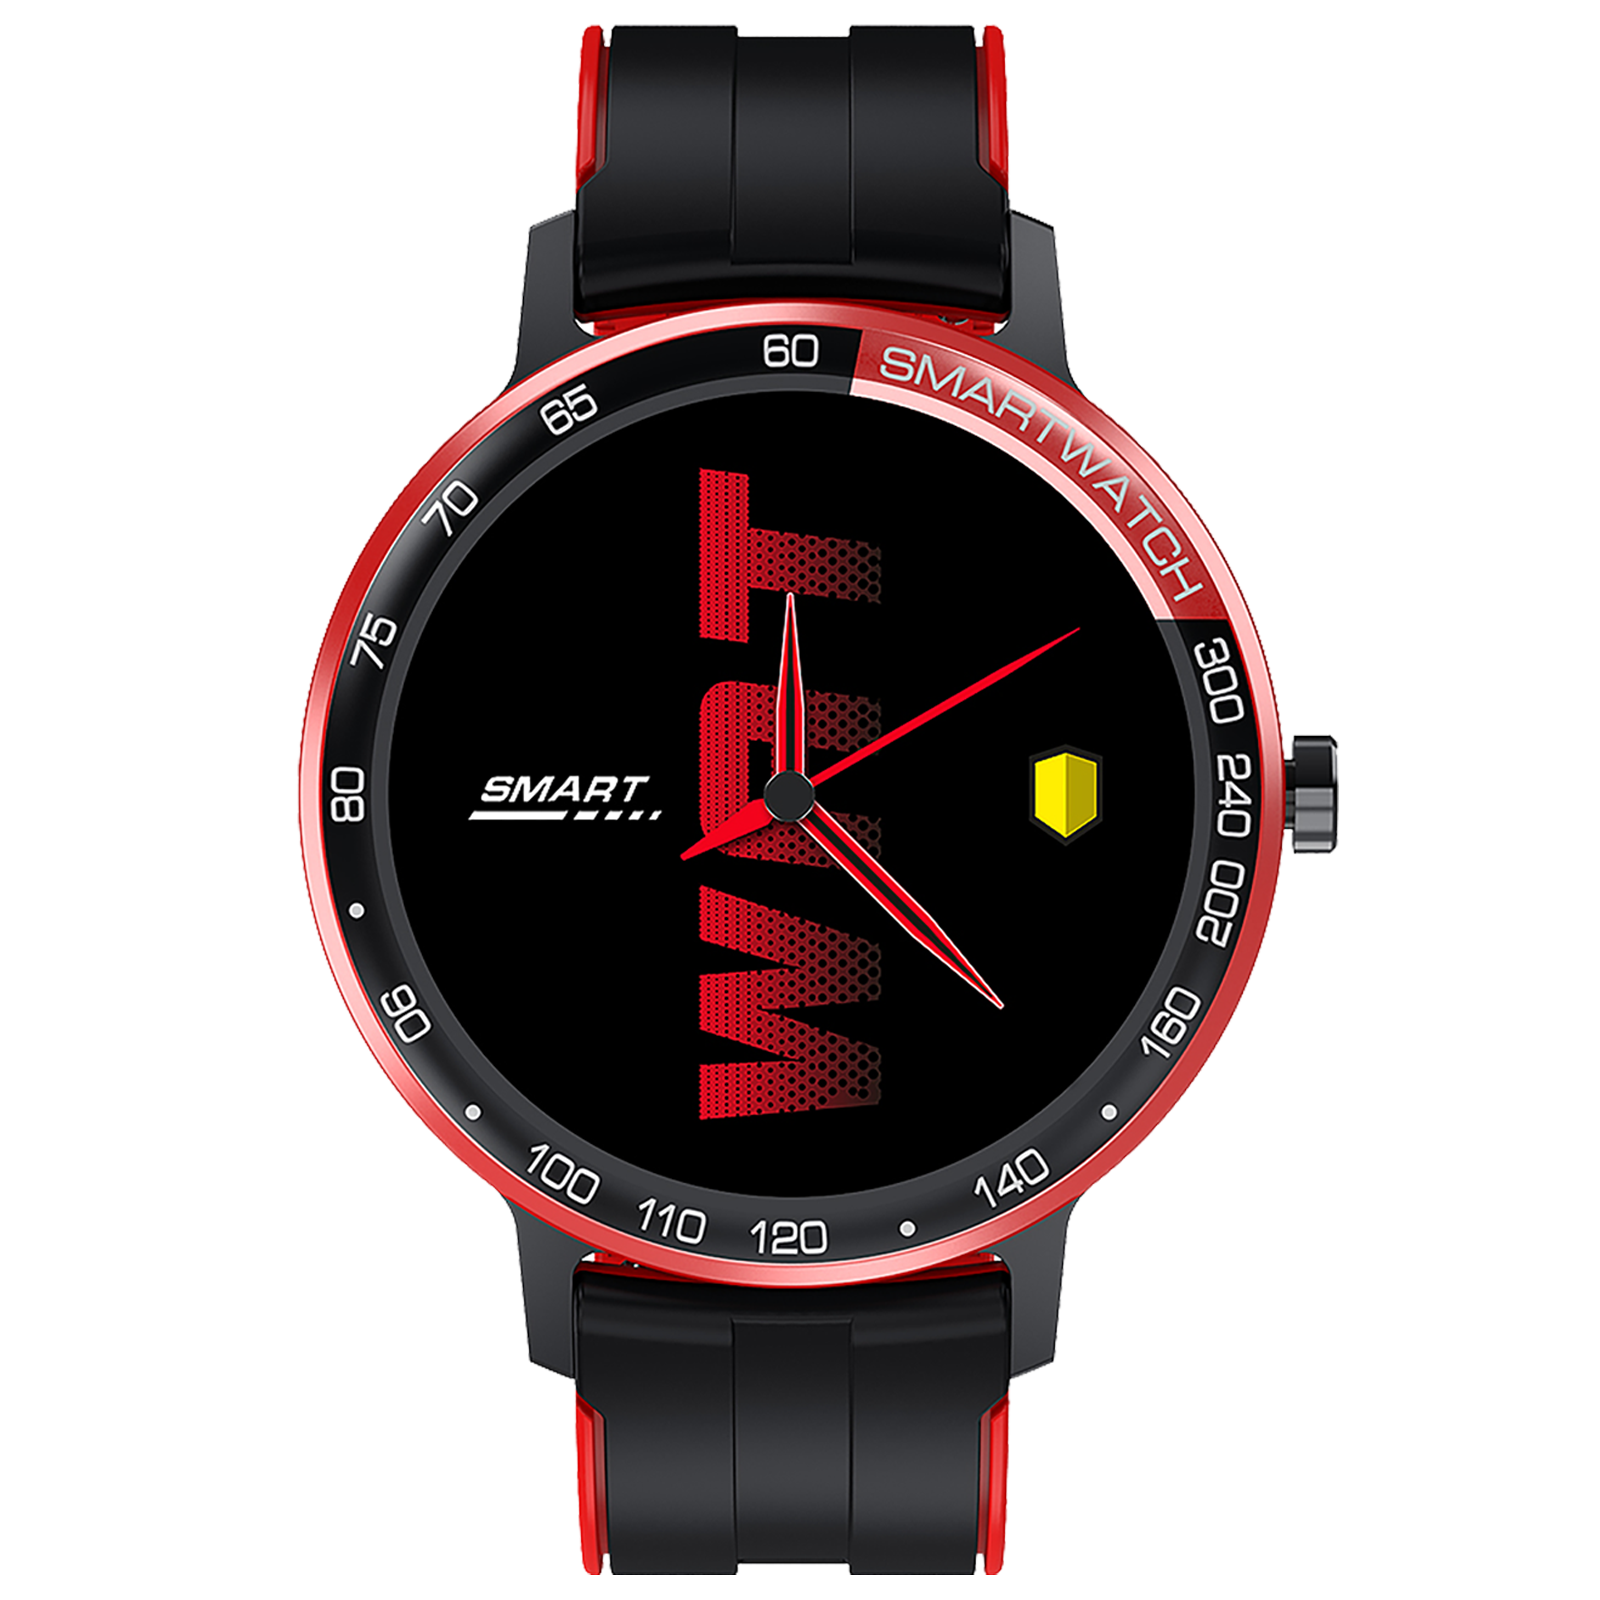 Inbase Urban Play Smart Watch (Bluetooth 5.0, 33.02 mm) (IPX68 Water Proof Resistance, IB-1076, Black, Zinc Alloy)